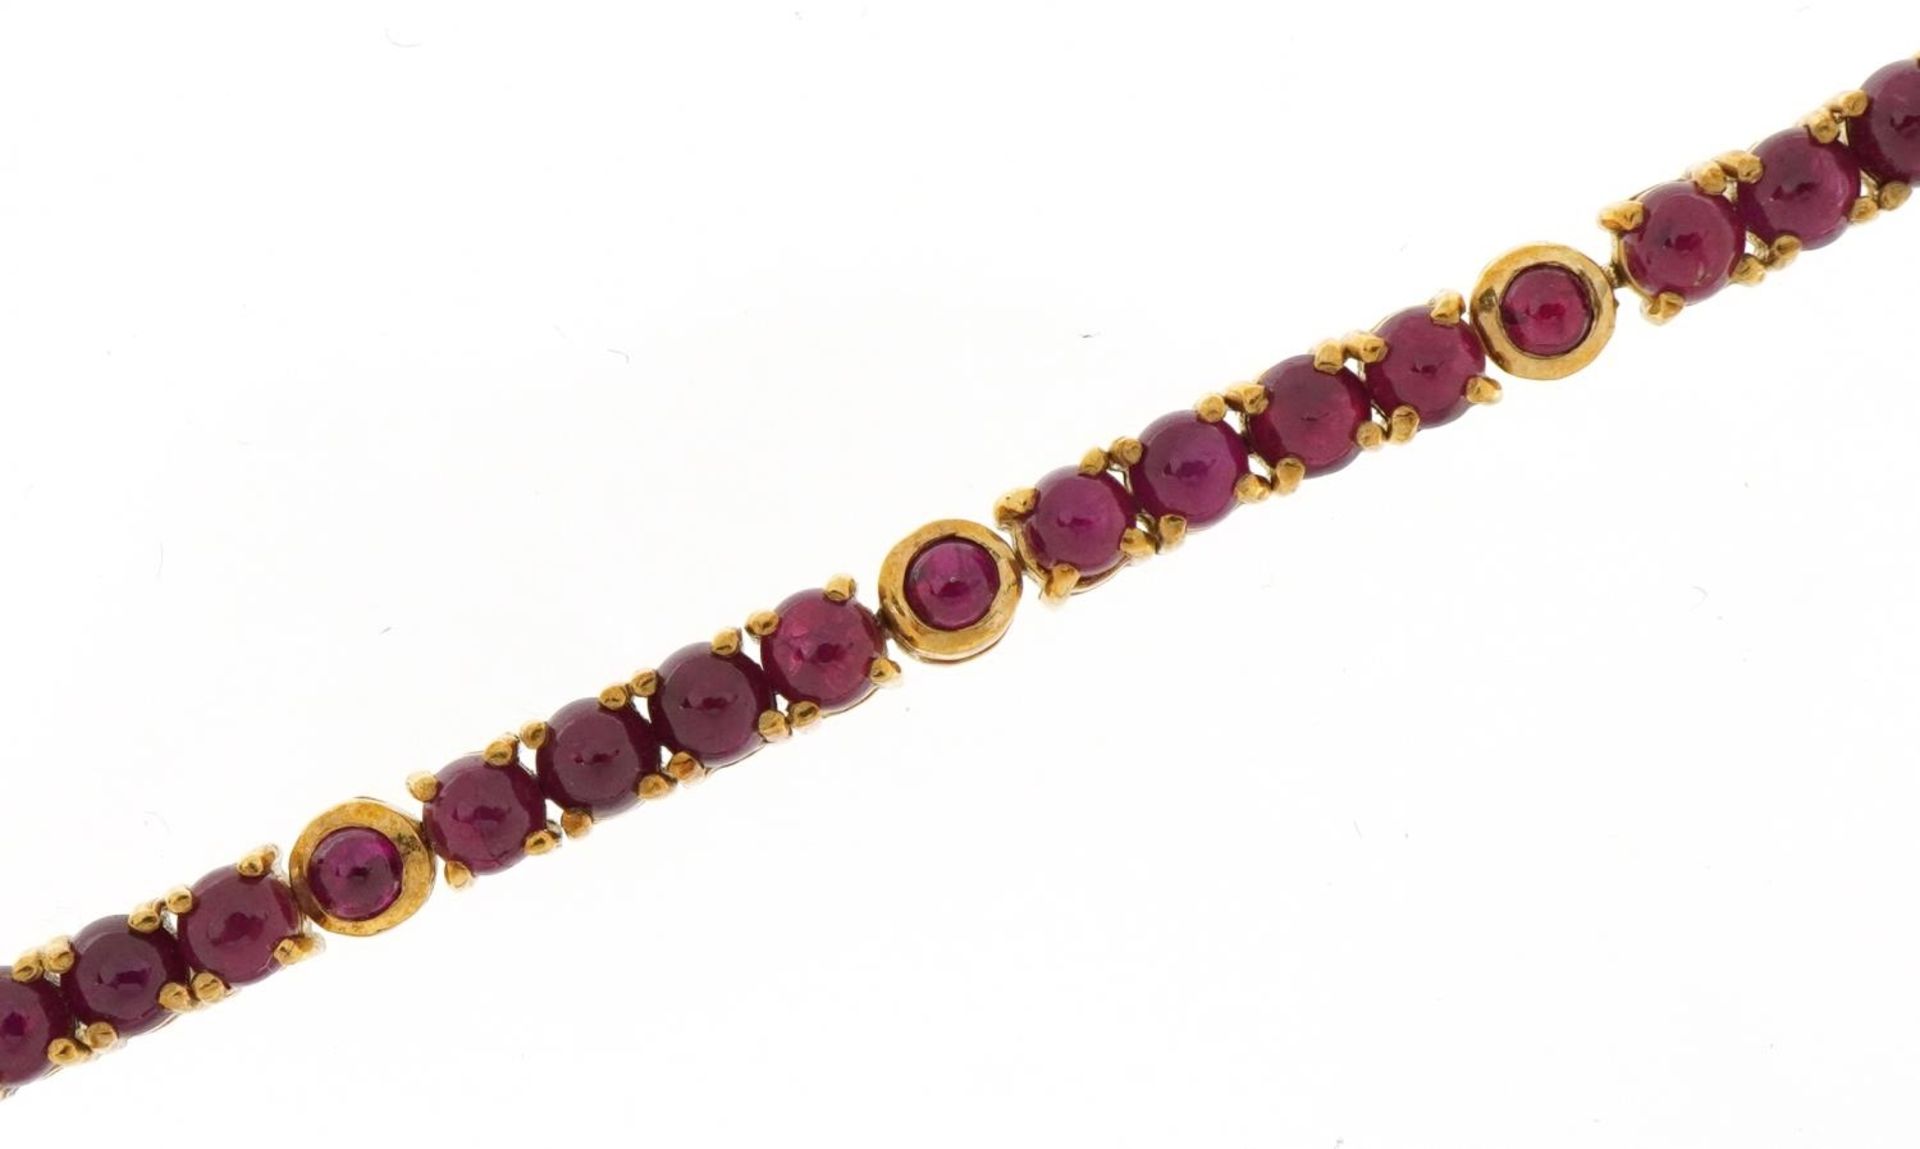 9ct gold cabochon ruby line bracelet, 19.5cm in length, 11.3g